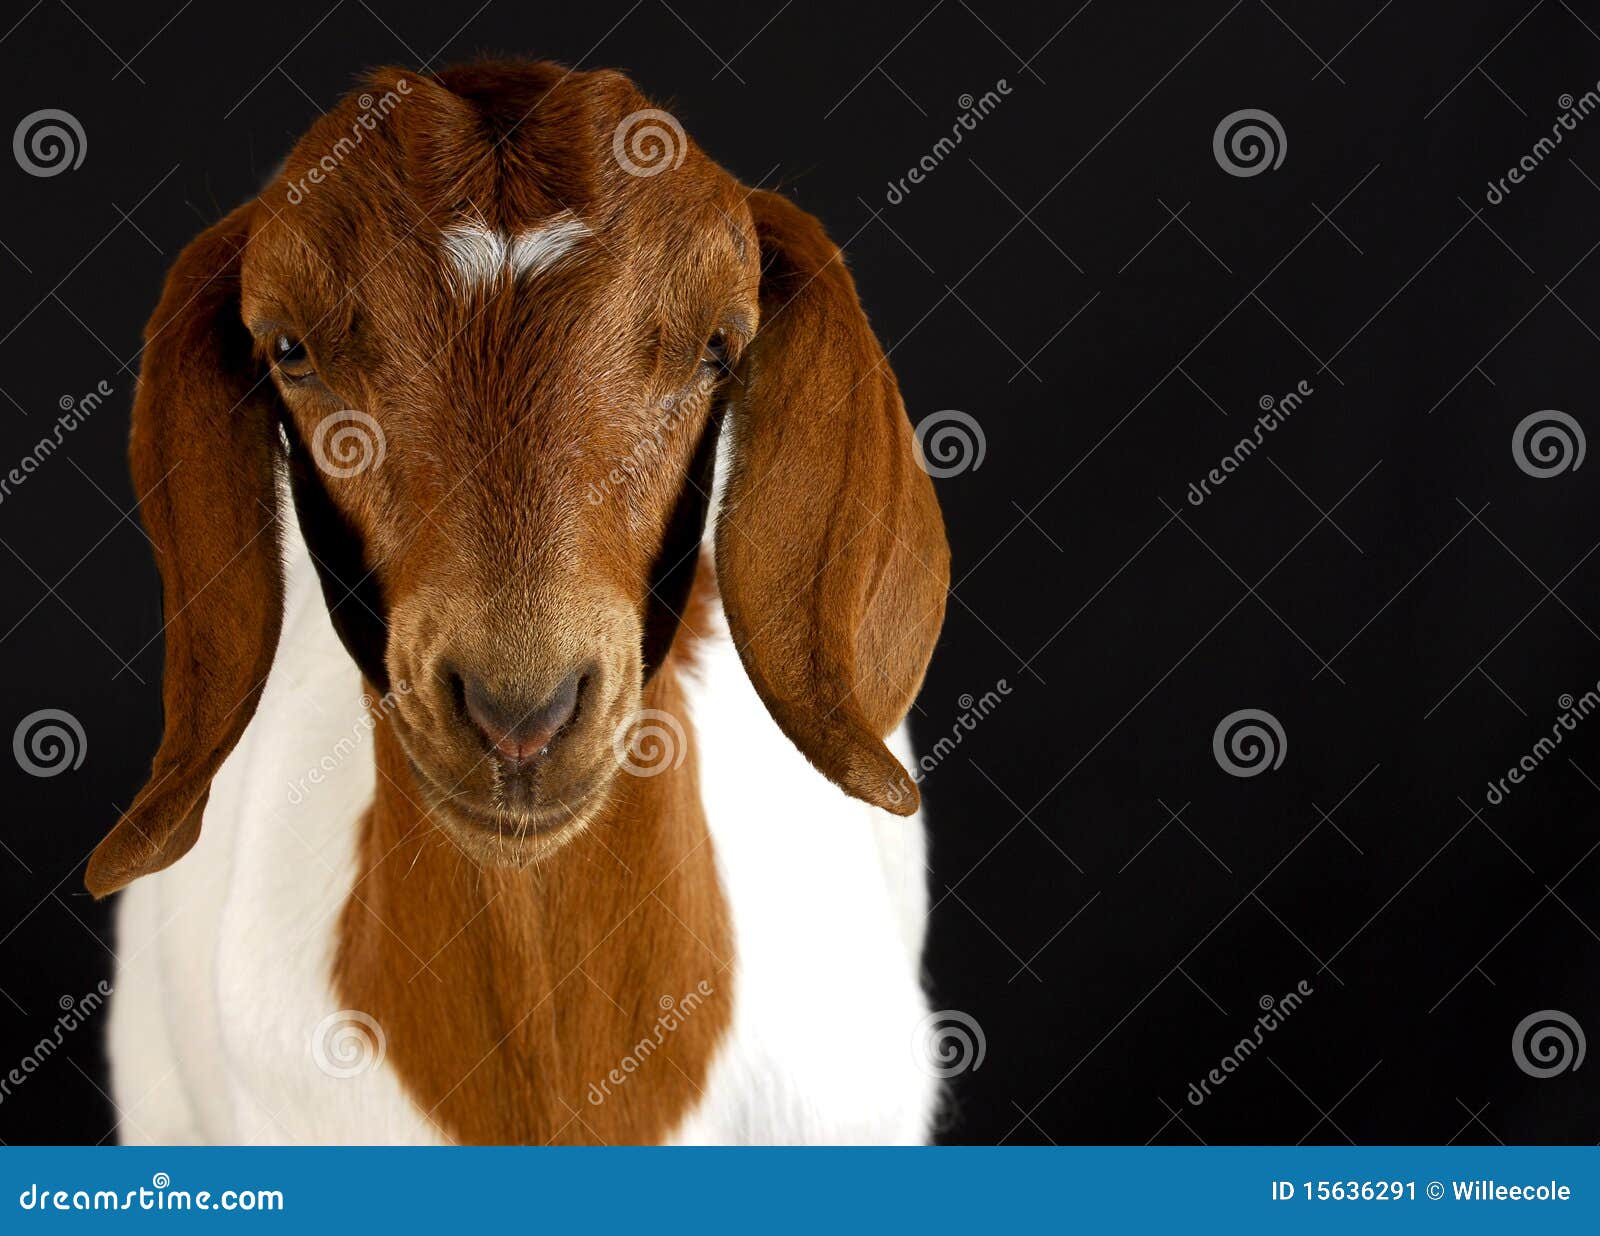 Goat portrait stock image. Image of head, farm, livestock - 15636291